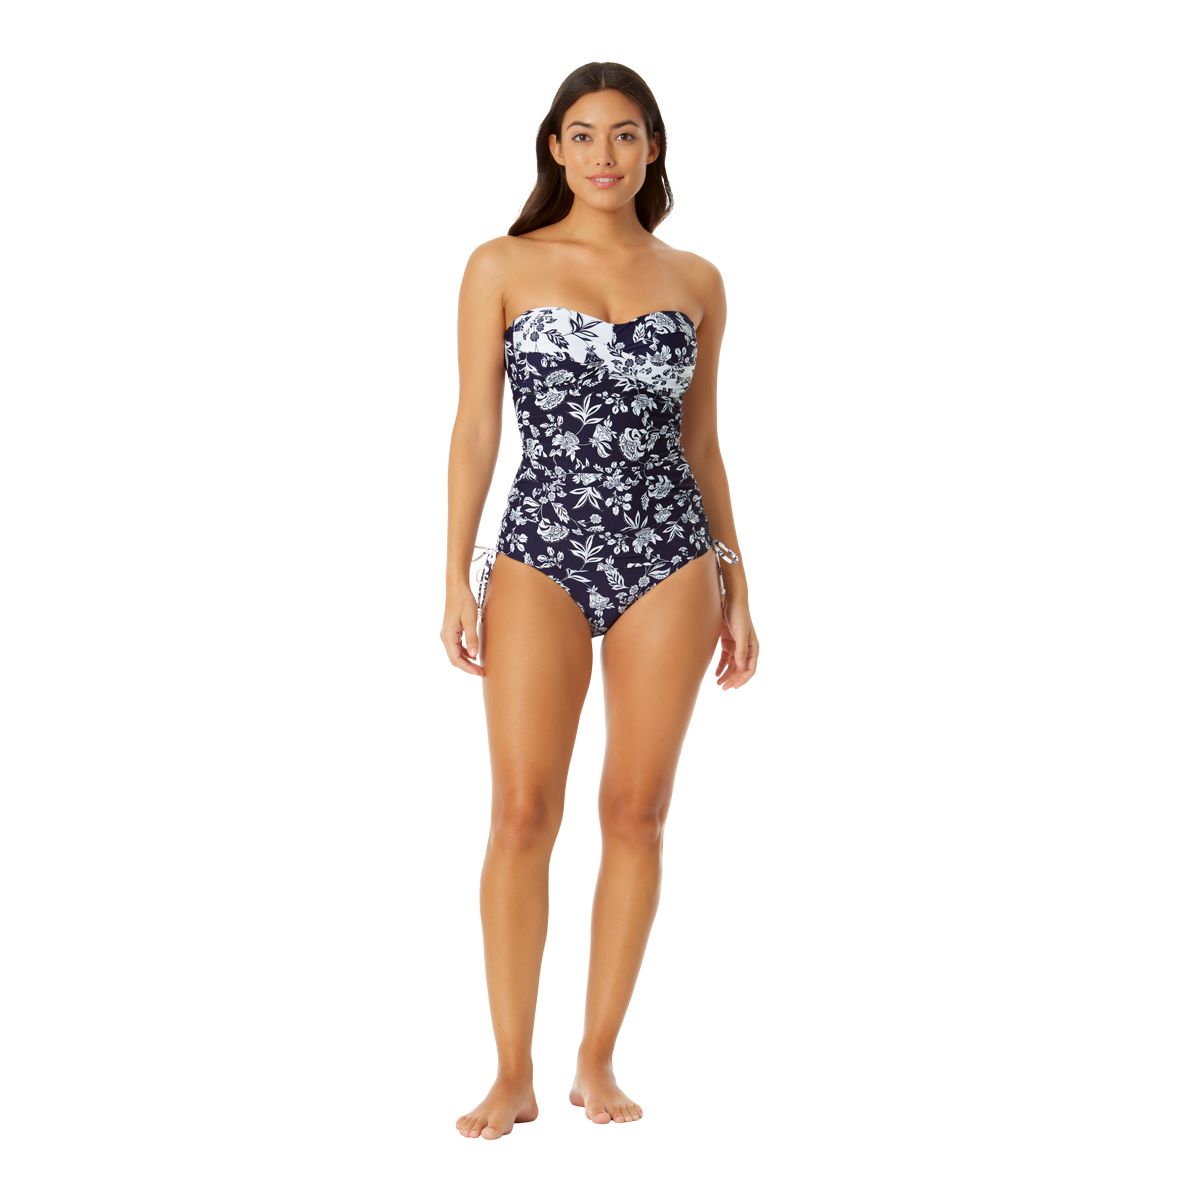 Artesands Women's Hues Midriff Swimsuit Bikini Top